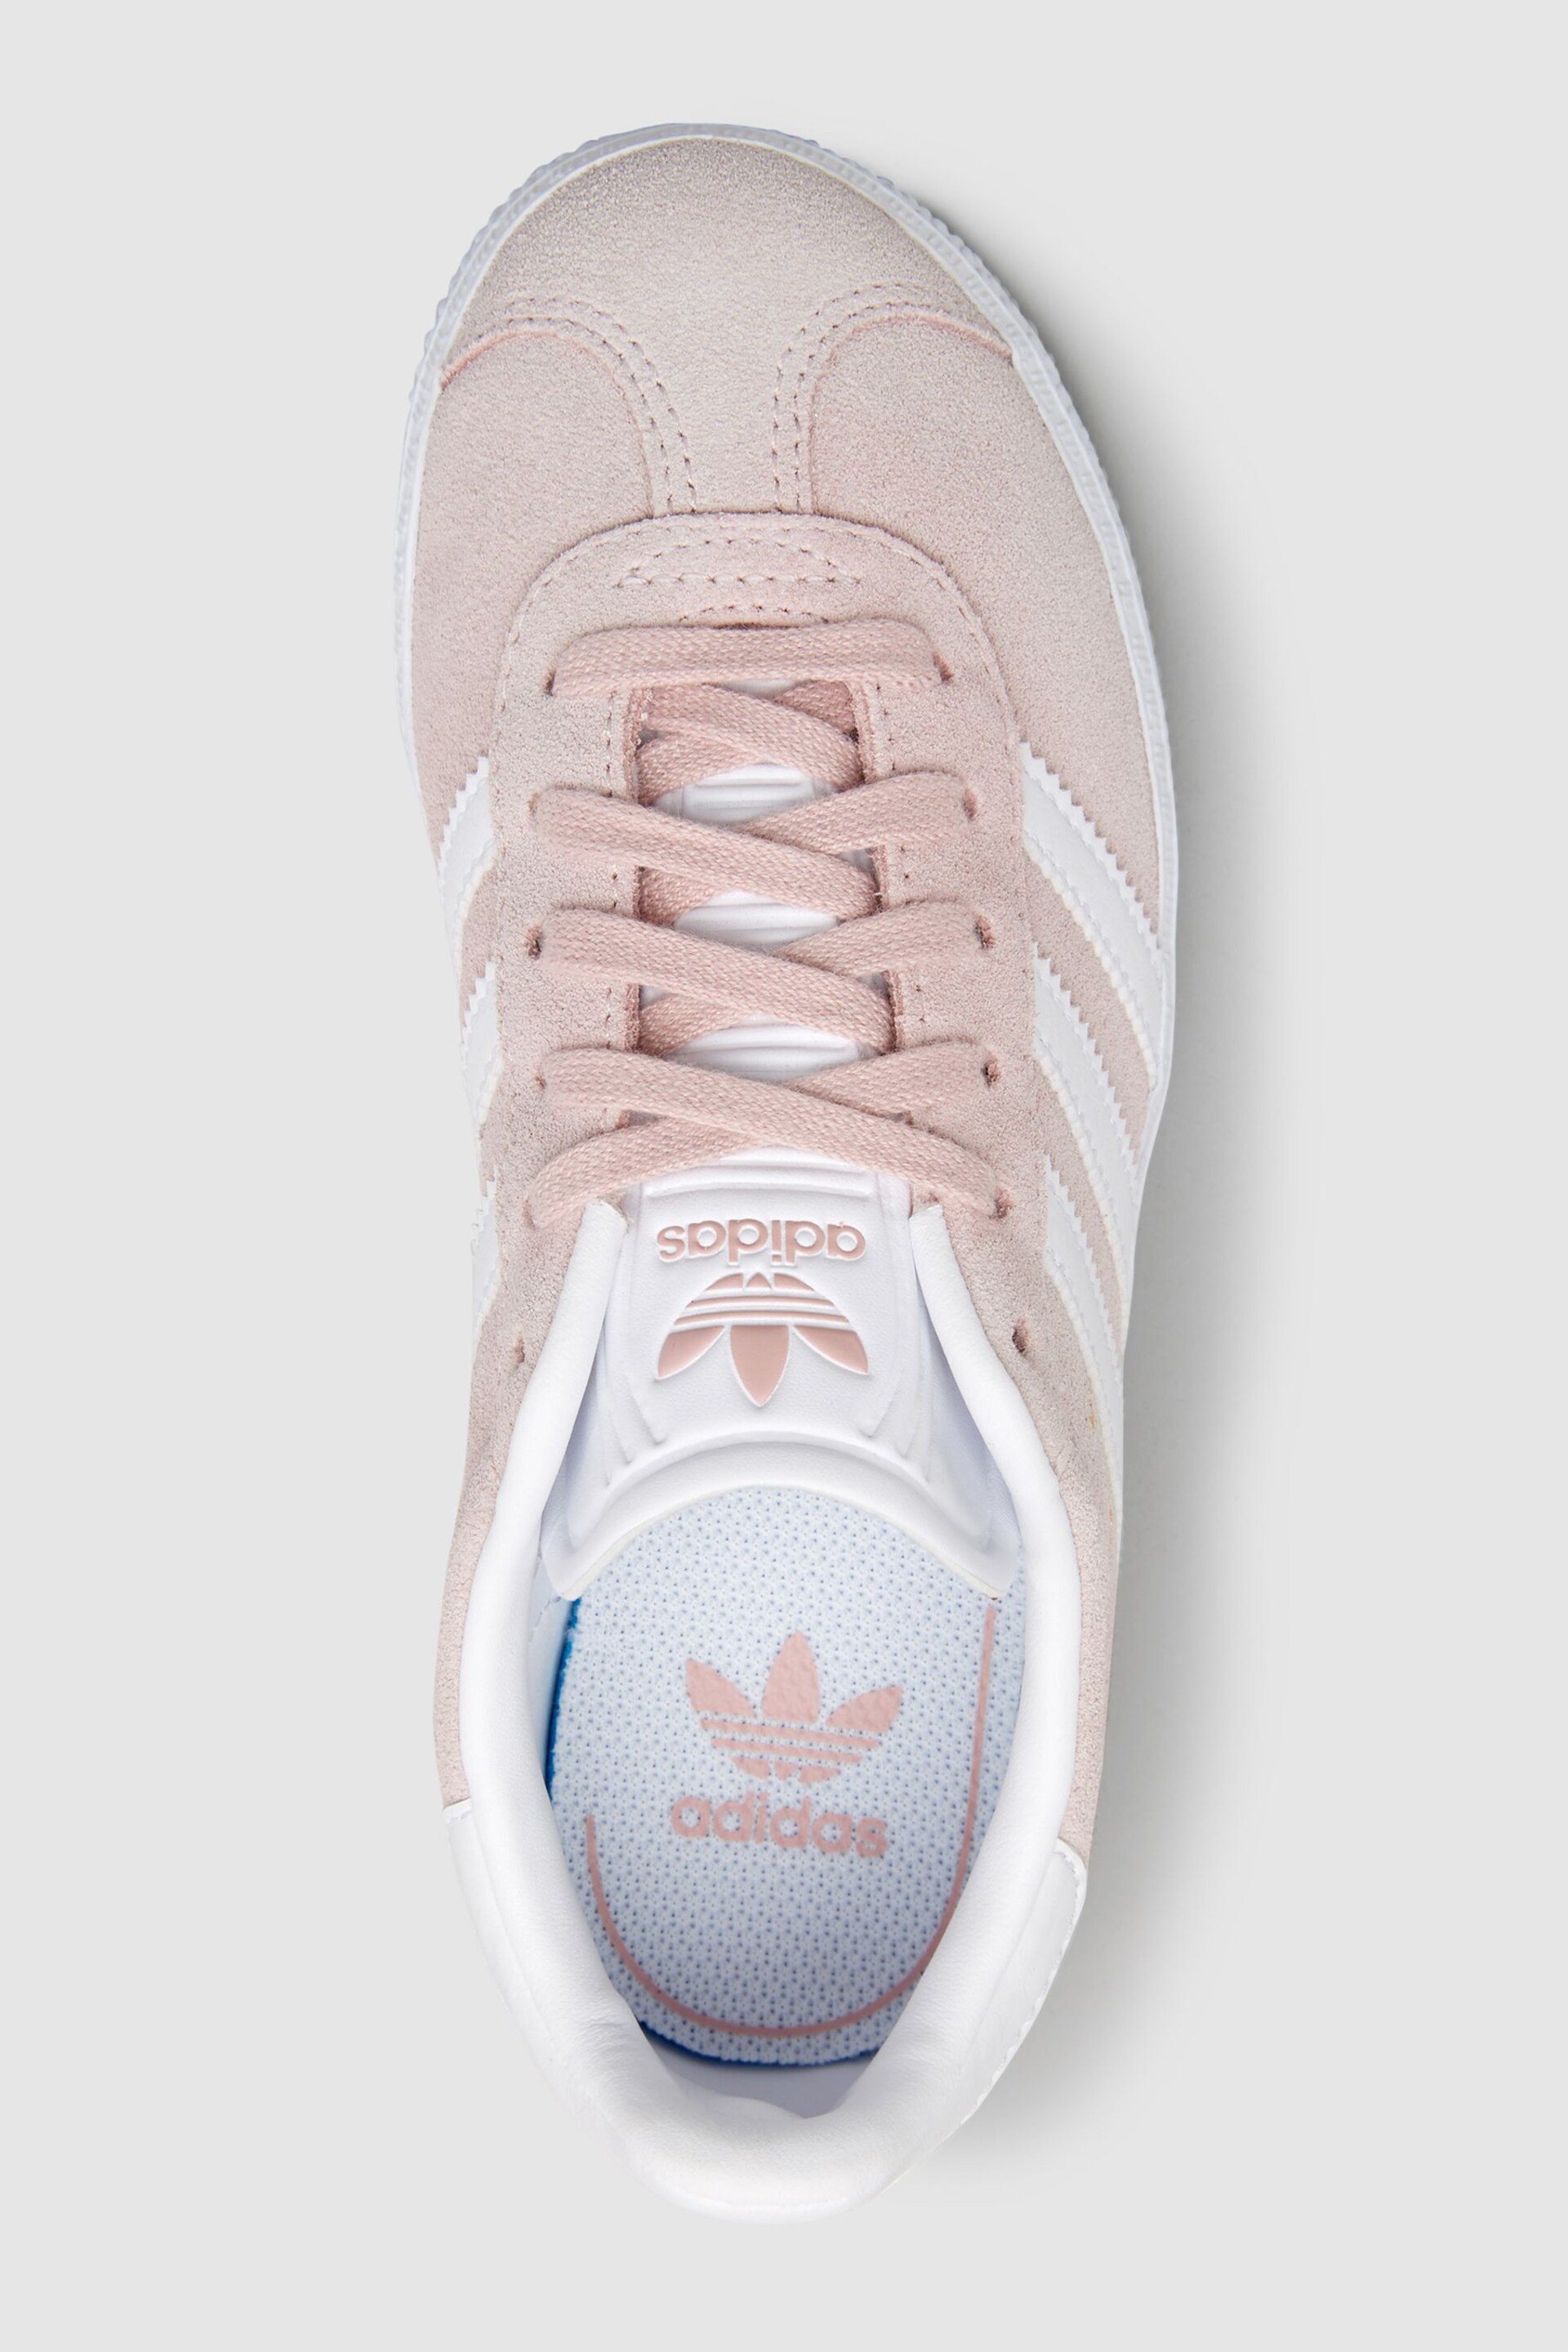 adidas Pale Pink Gazelle Shoes - Image 3 of 4